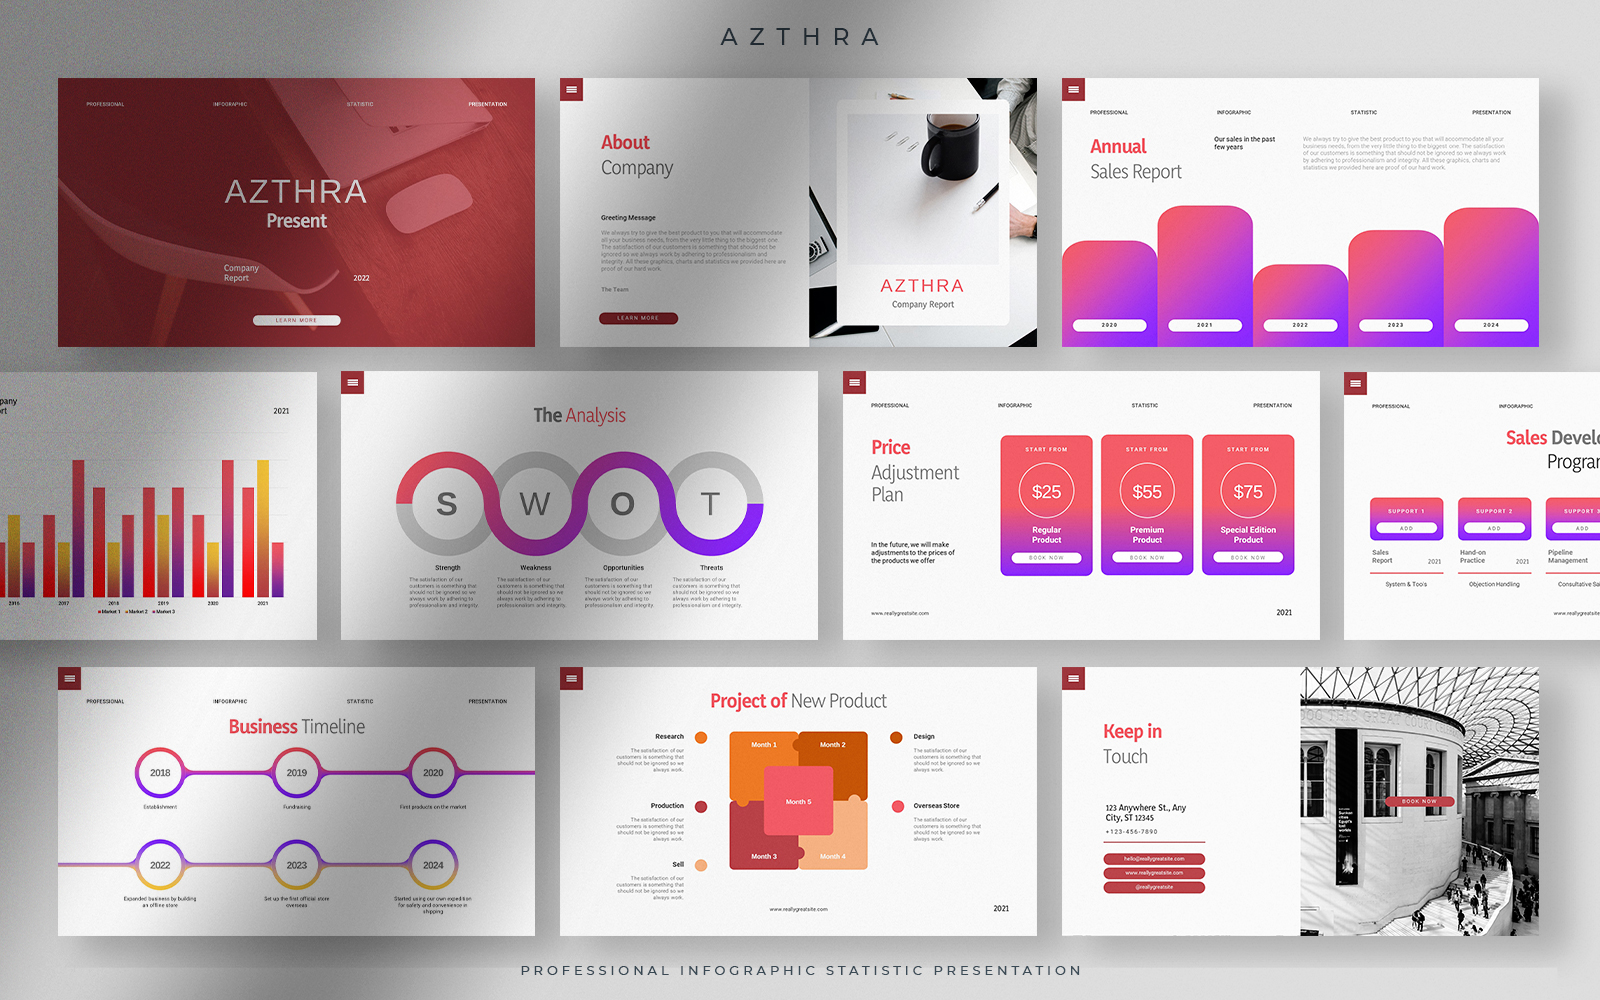 Azthra - Professional Infographic Statistic Presentation